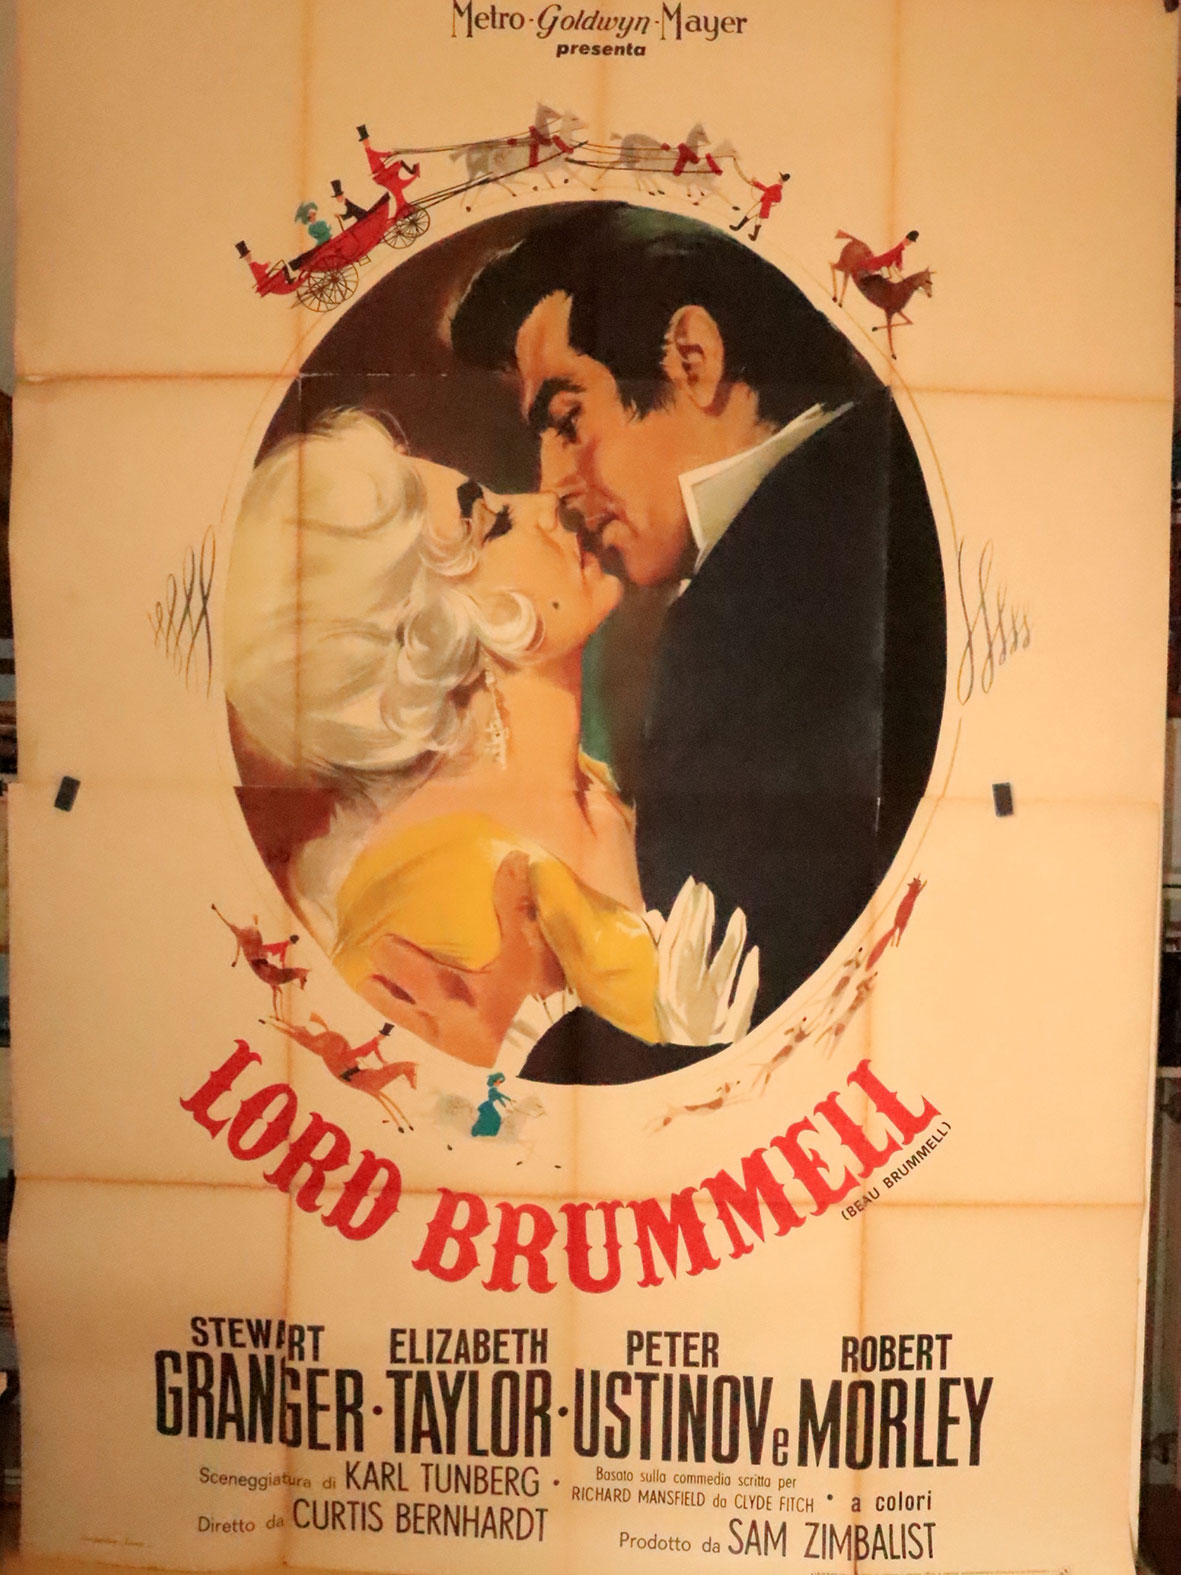 LORD BRUMMELL